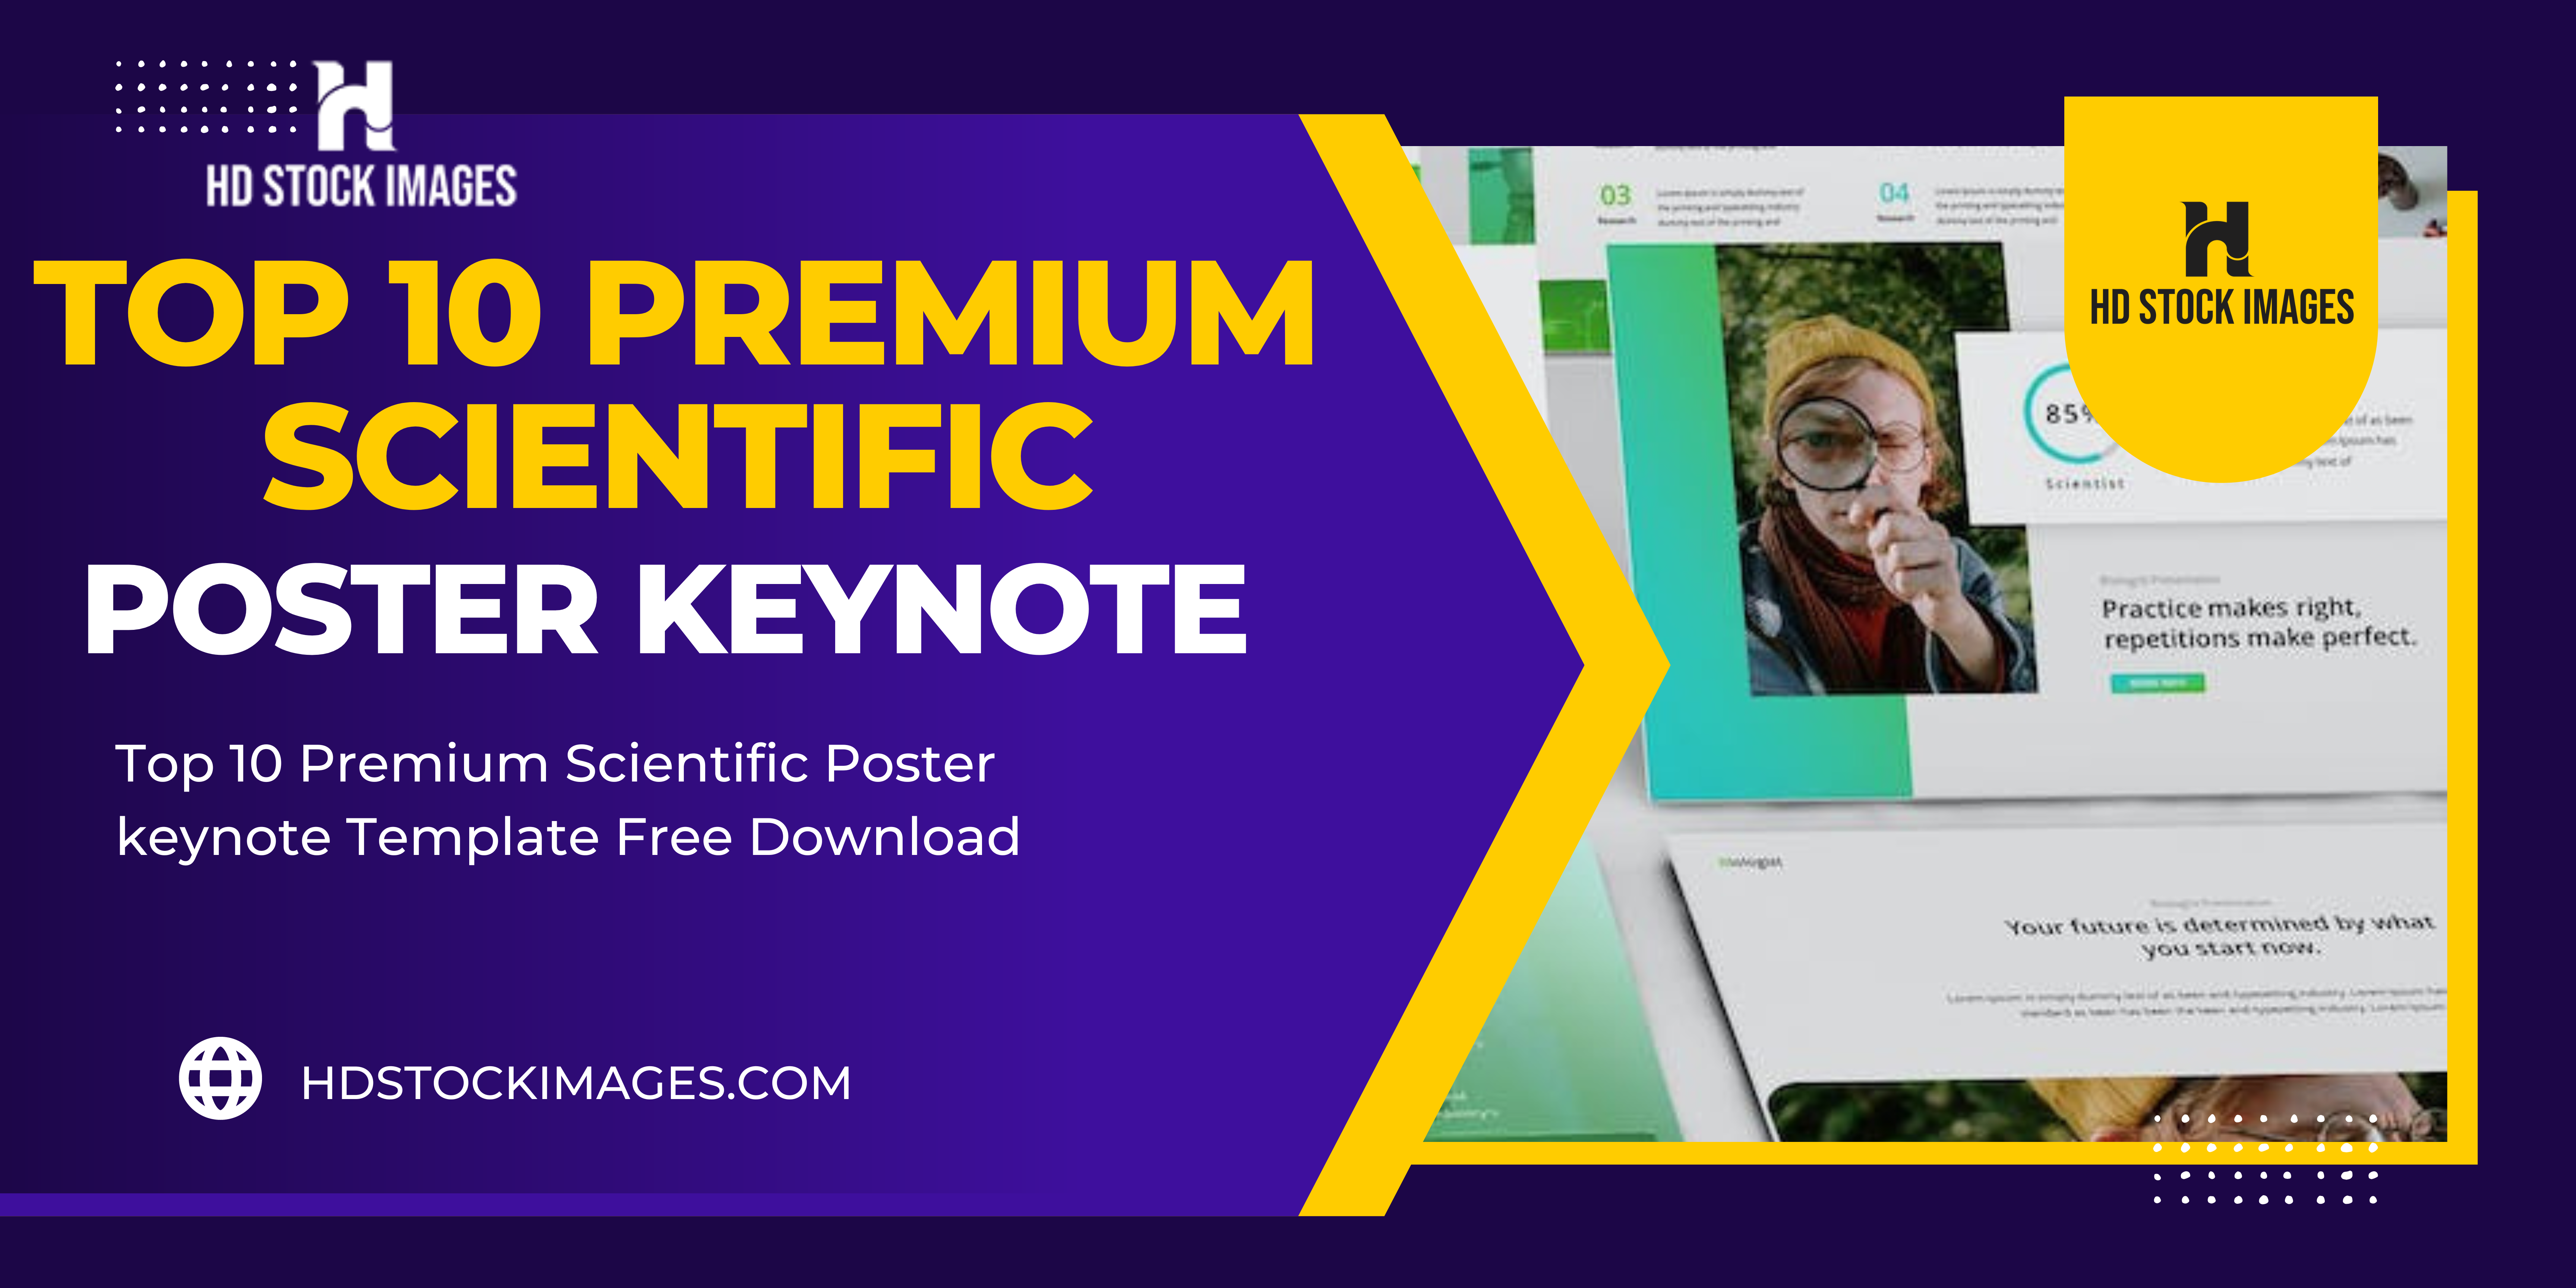 Top 10 Premium Scientific Poster keynote Template Free Download